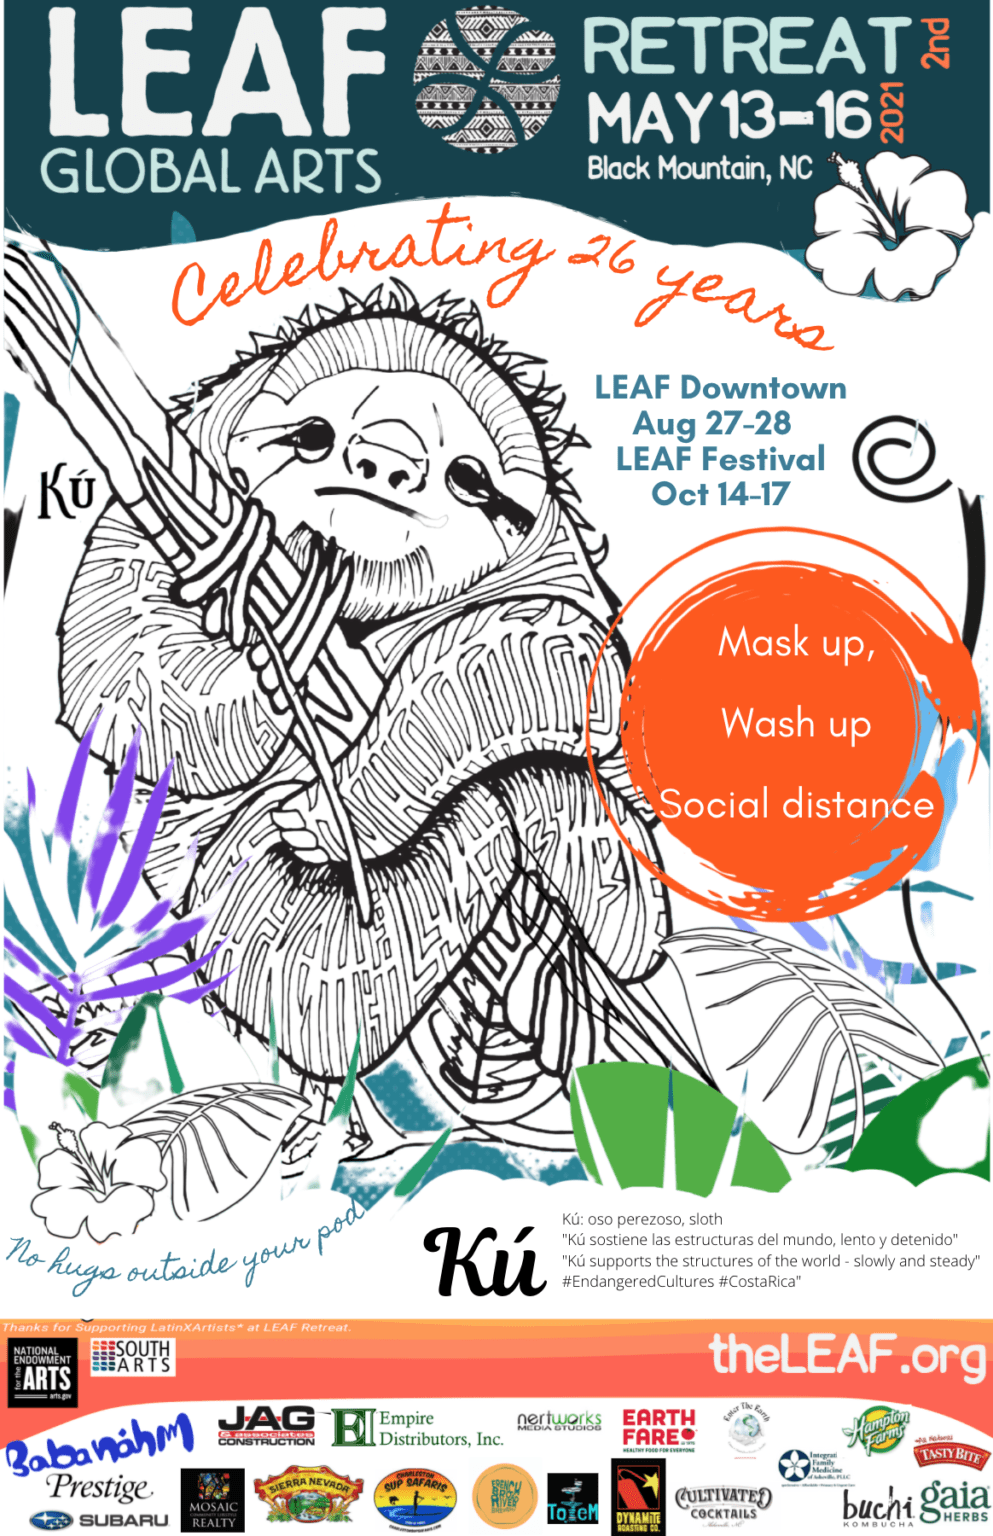 LEAF Festival Lineup LEAF Global Arts